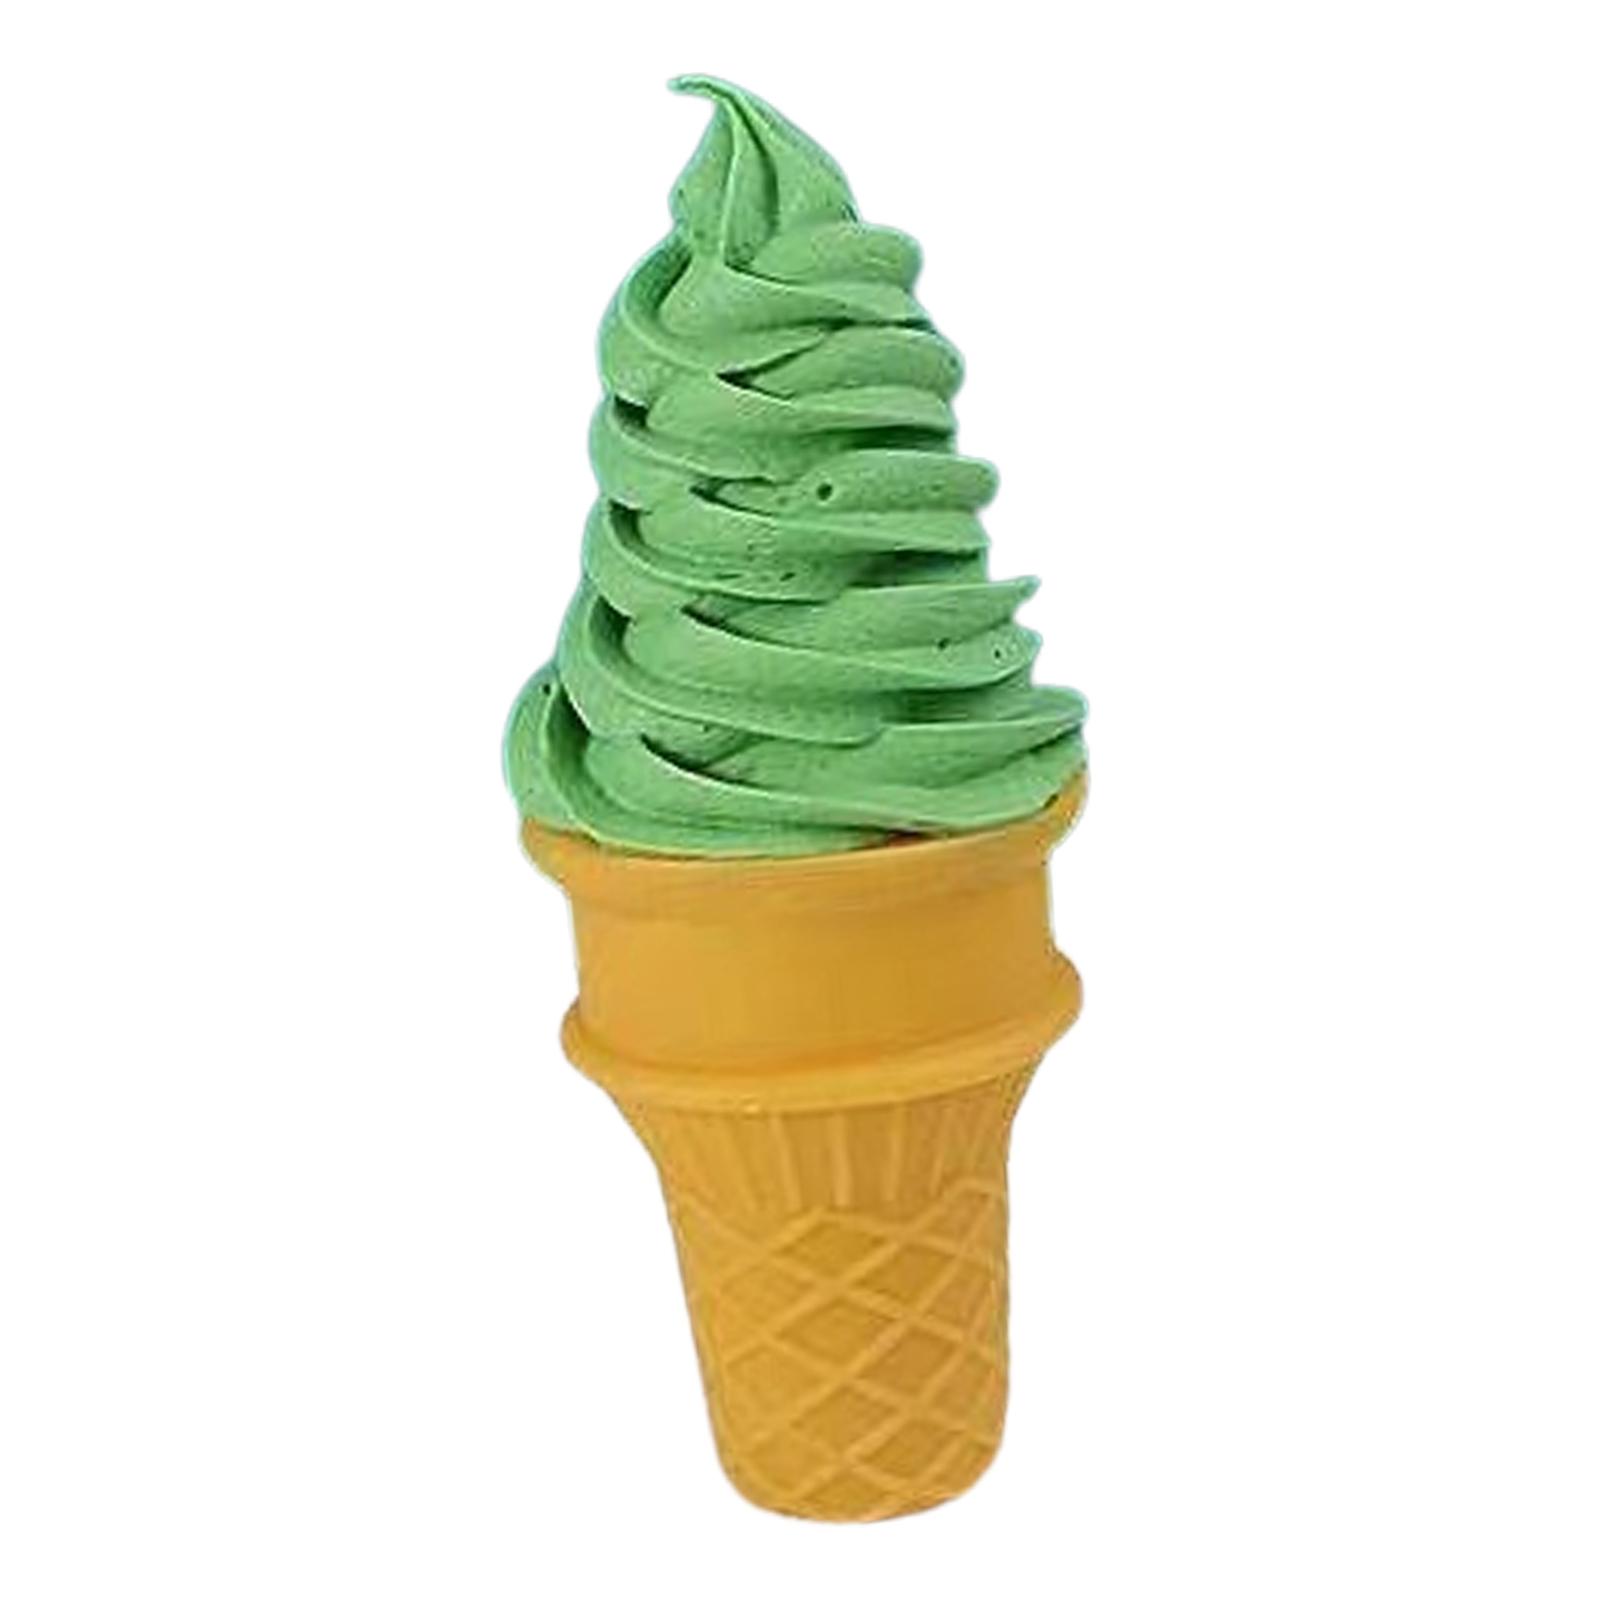 Fake Ice Cream Cone Food Model for Display Dessert Photo Props Desktop Decor Green